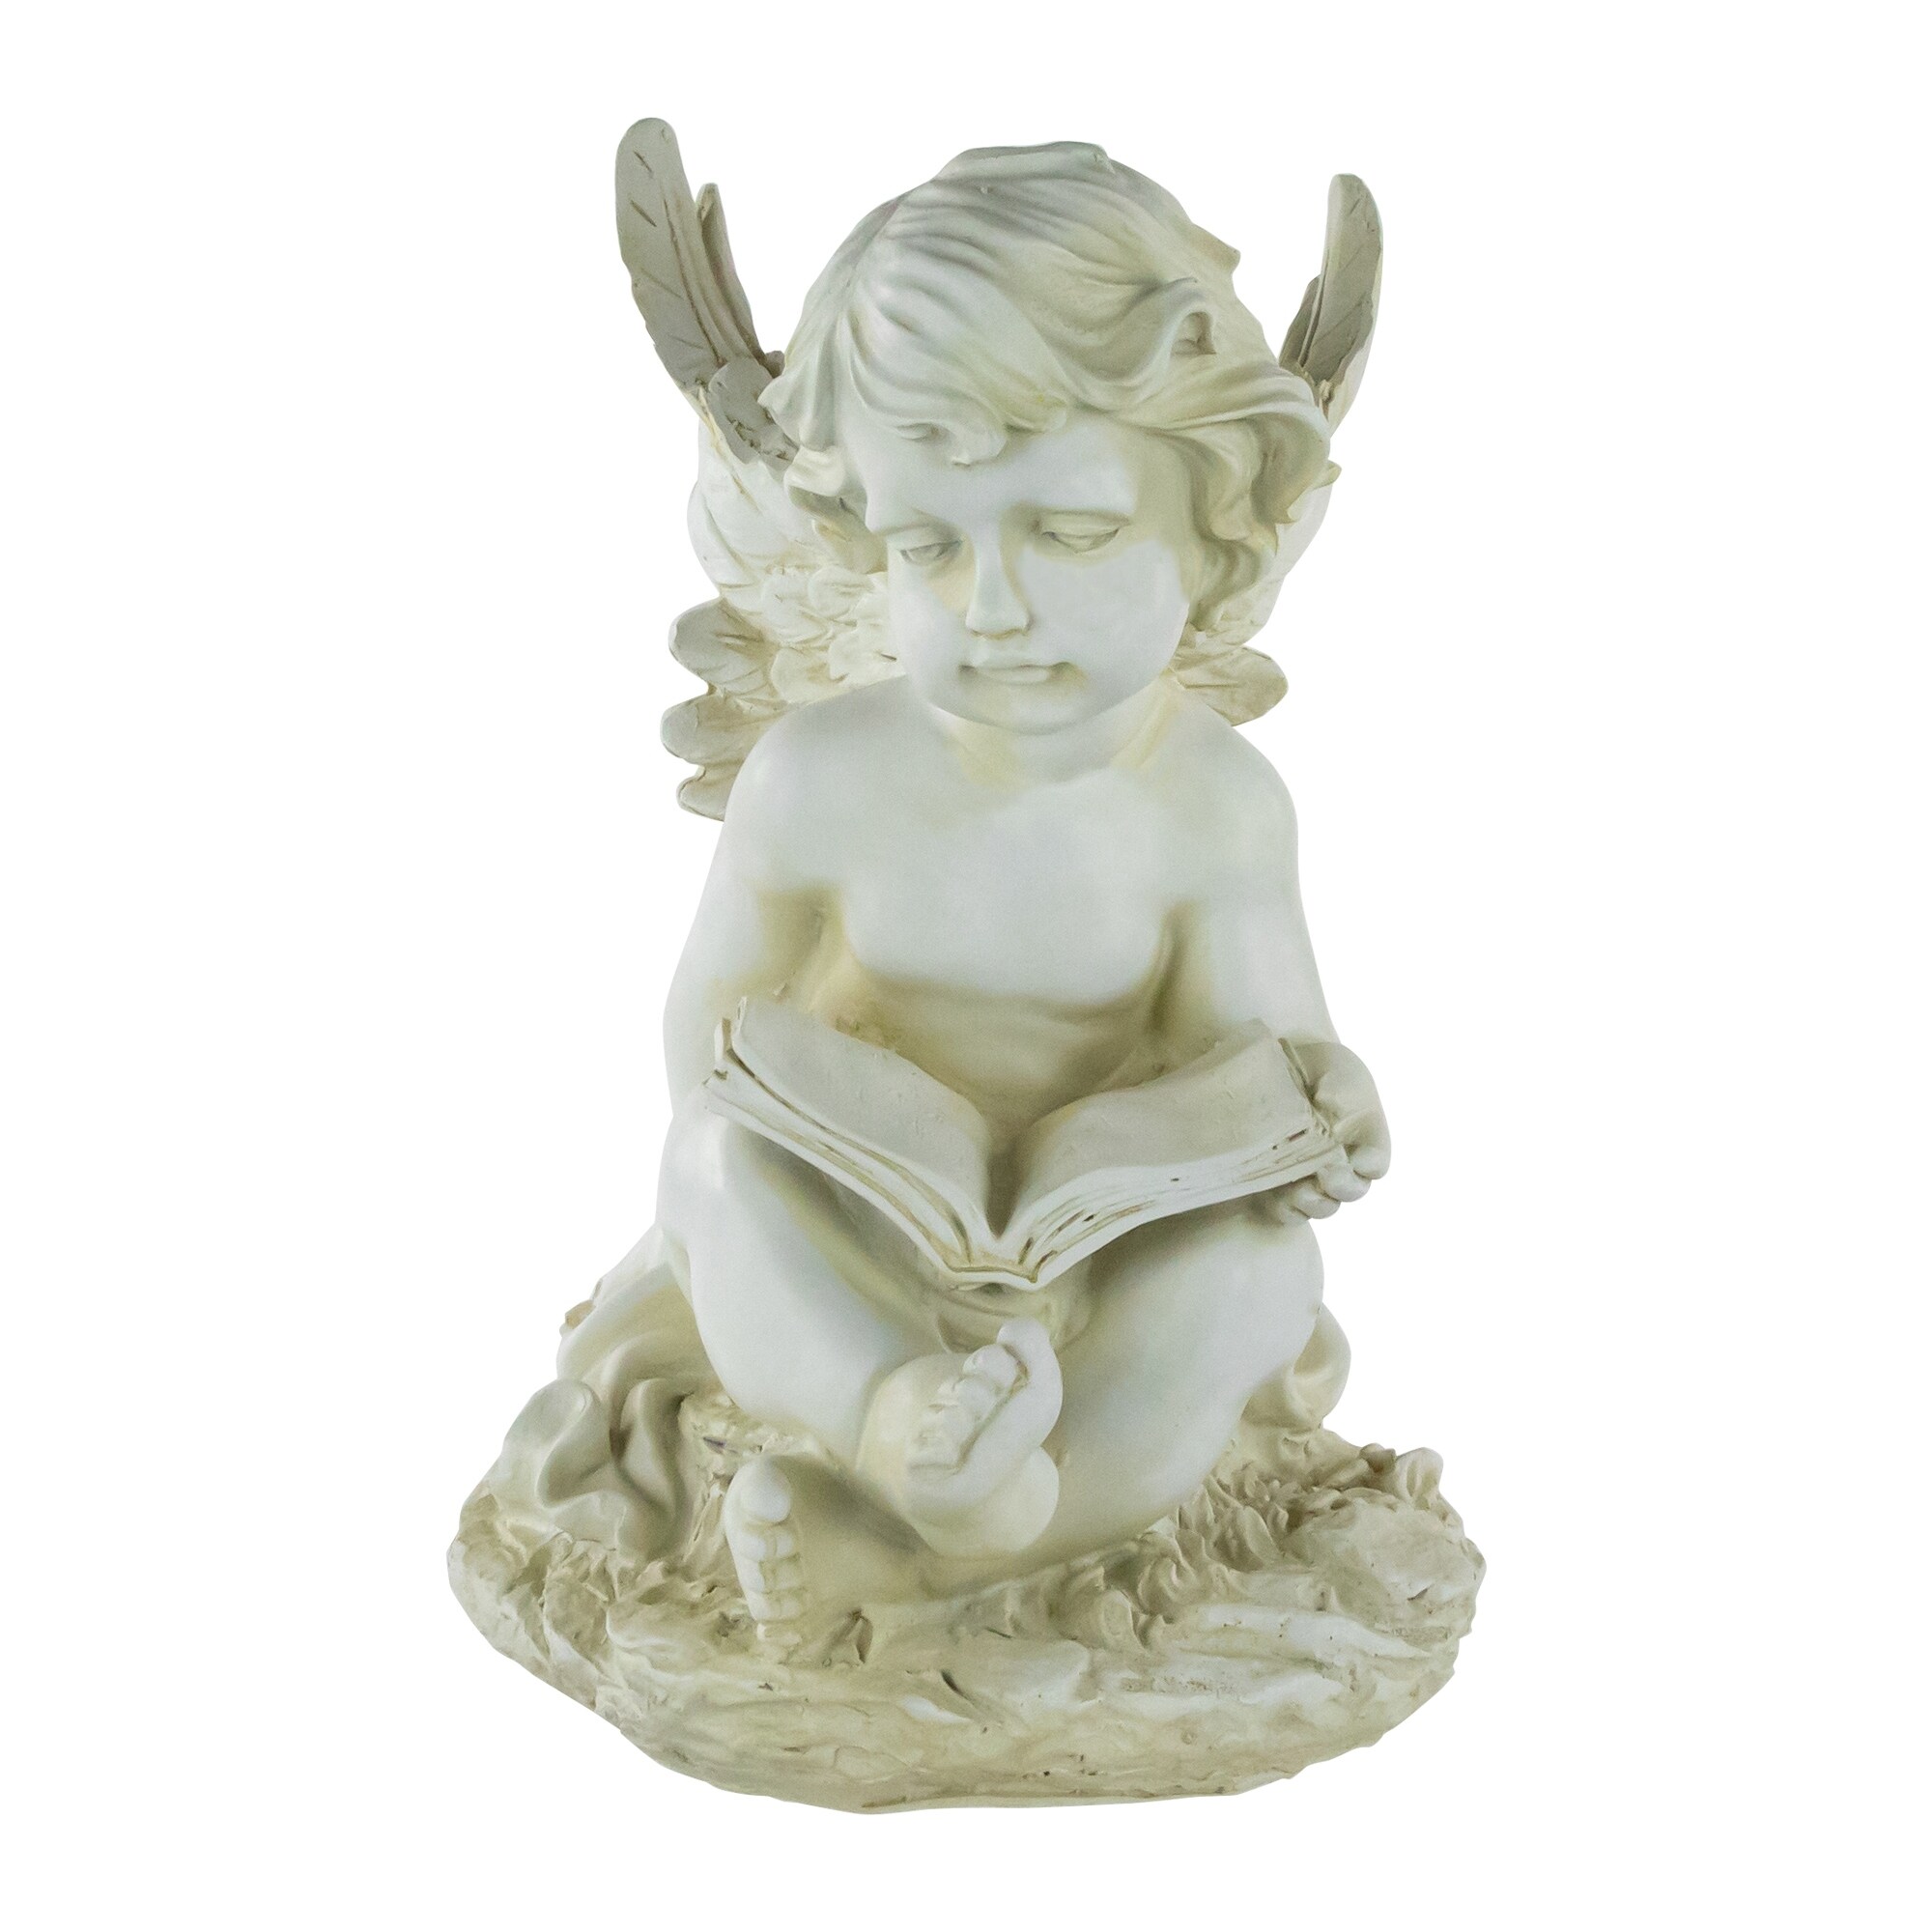 11.5" Ivory Sitting Cherub Angel with Book Outdoor Patio Garden Statue - image 1 of 4